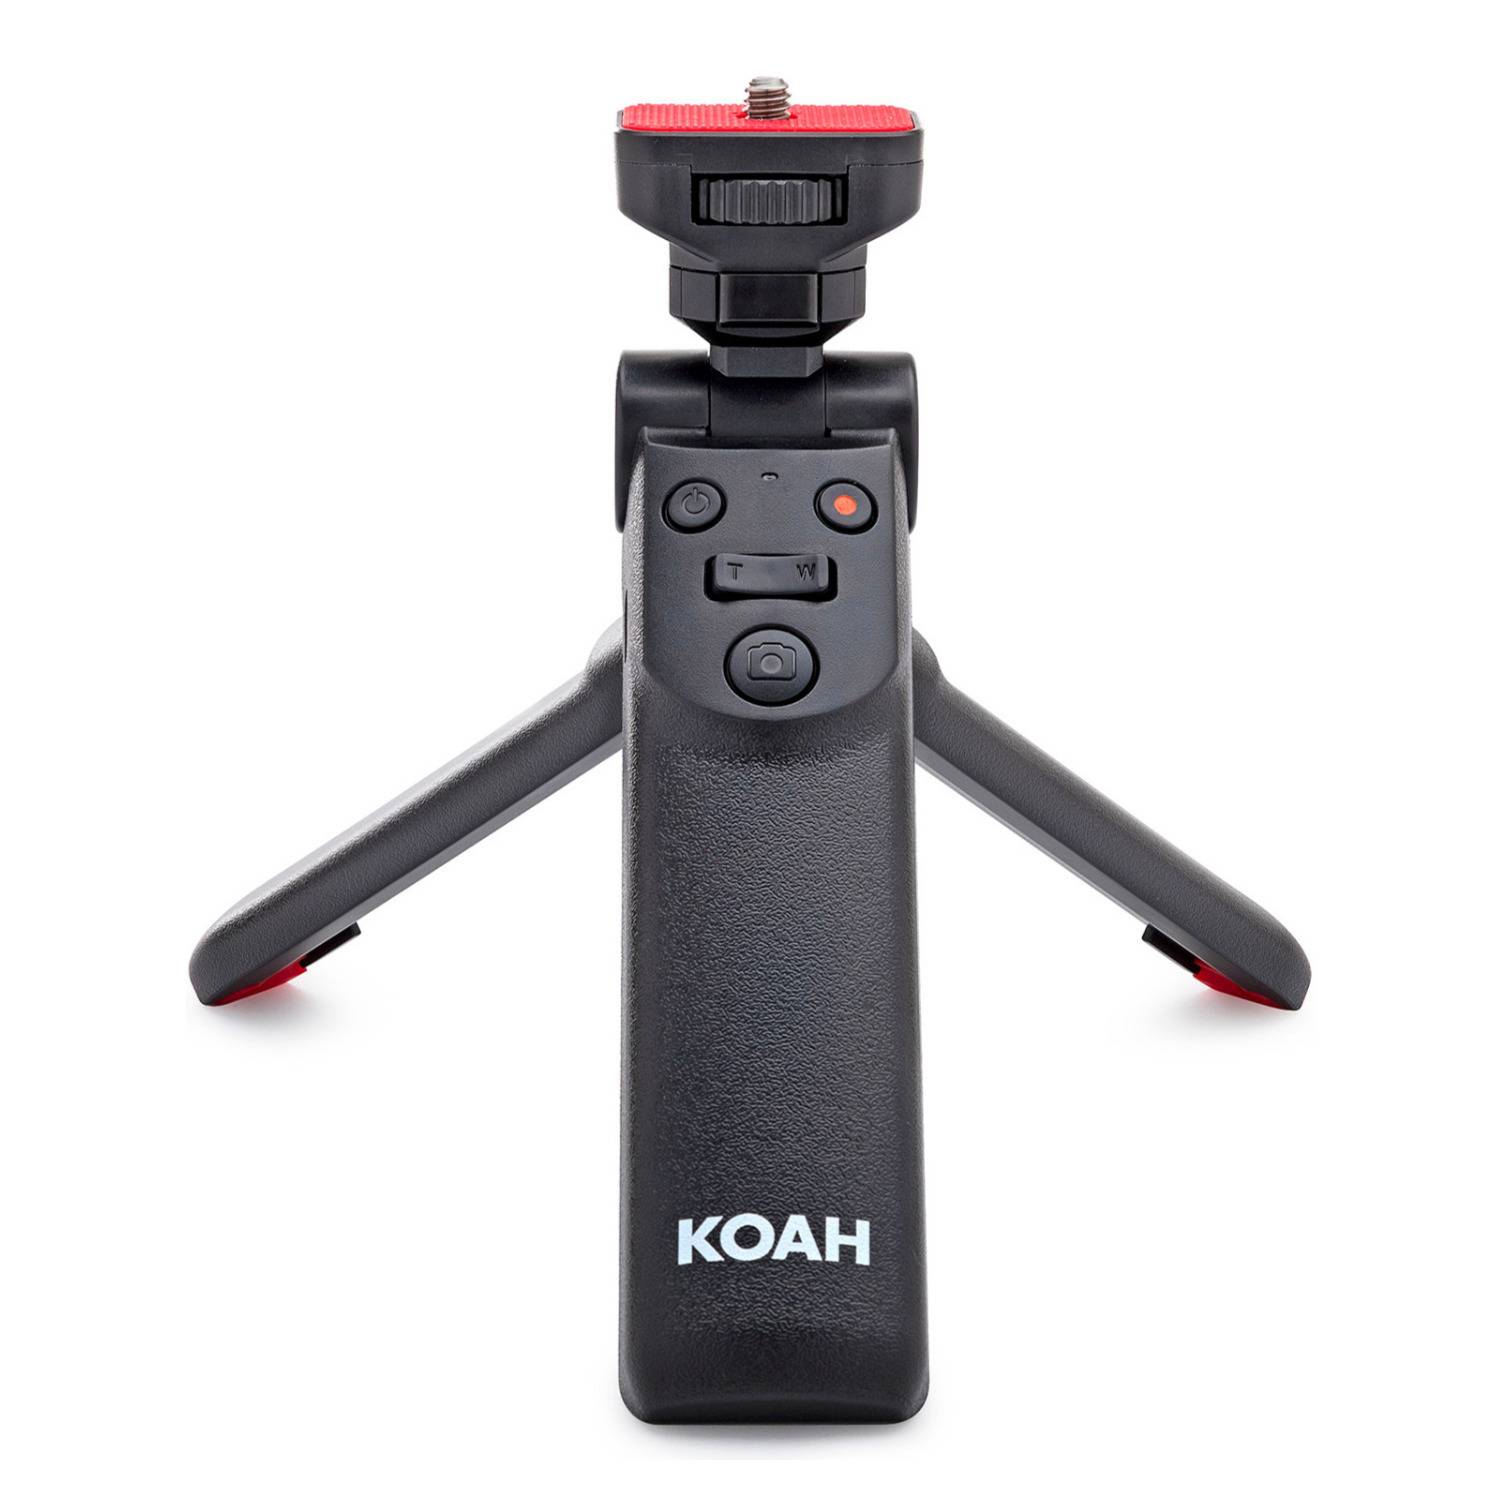 Koah Vlogging Camera Grip and Tripod for Content Creators